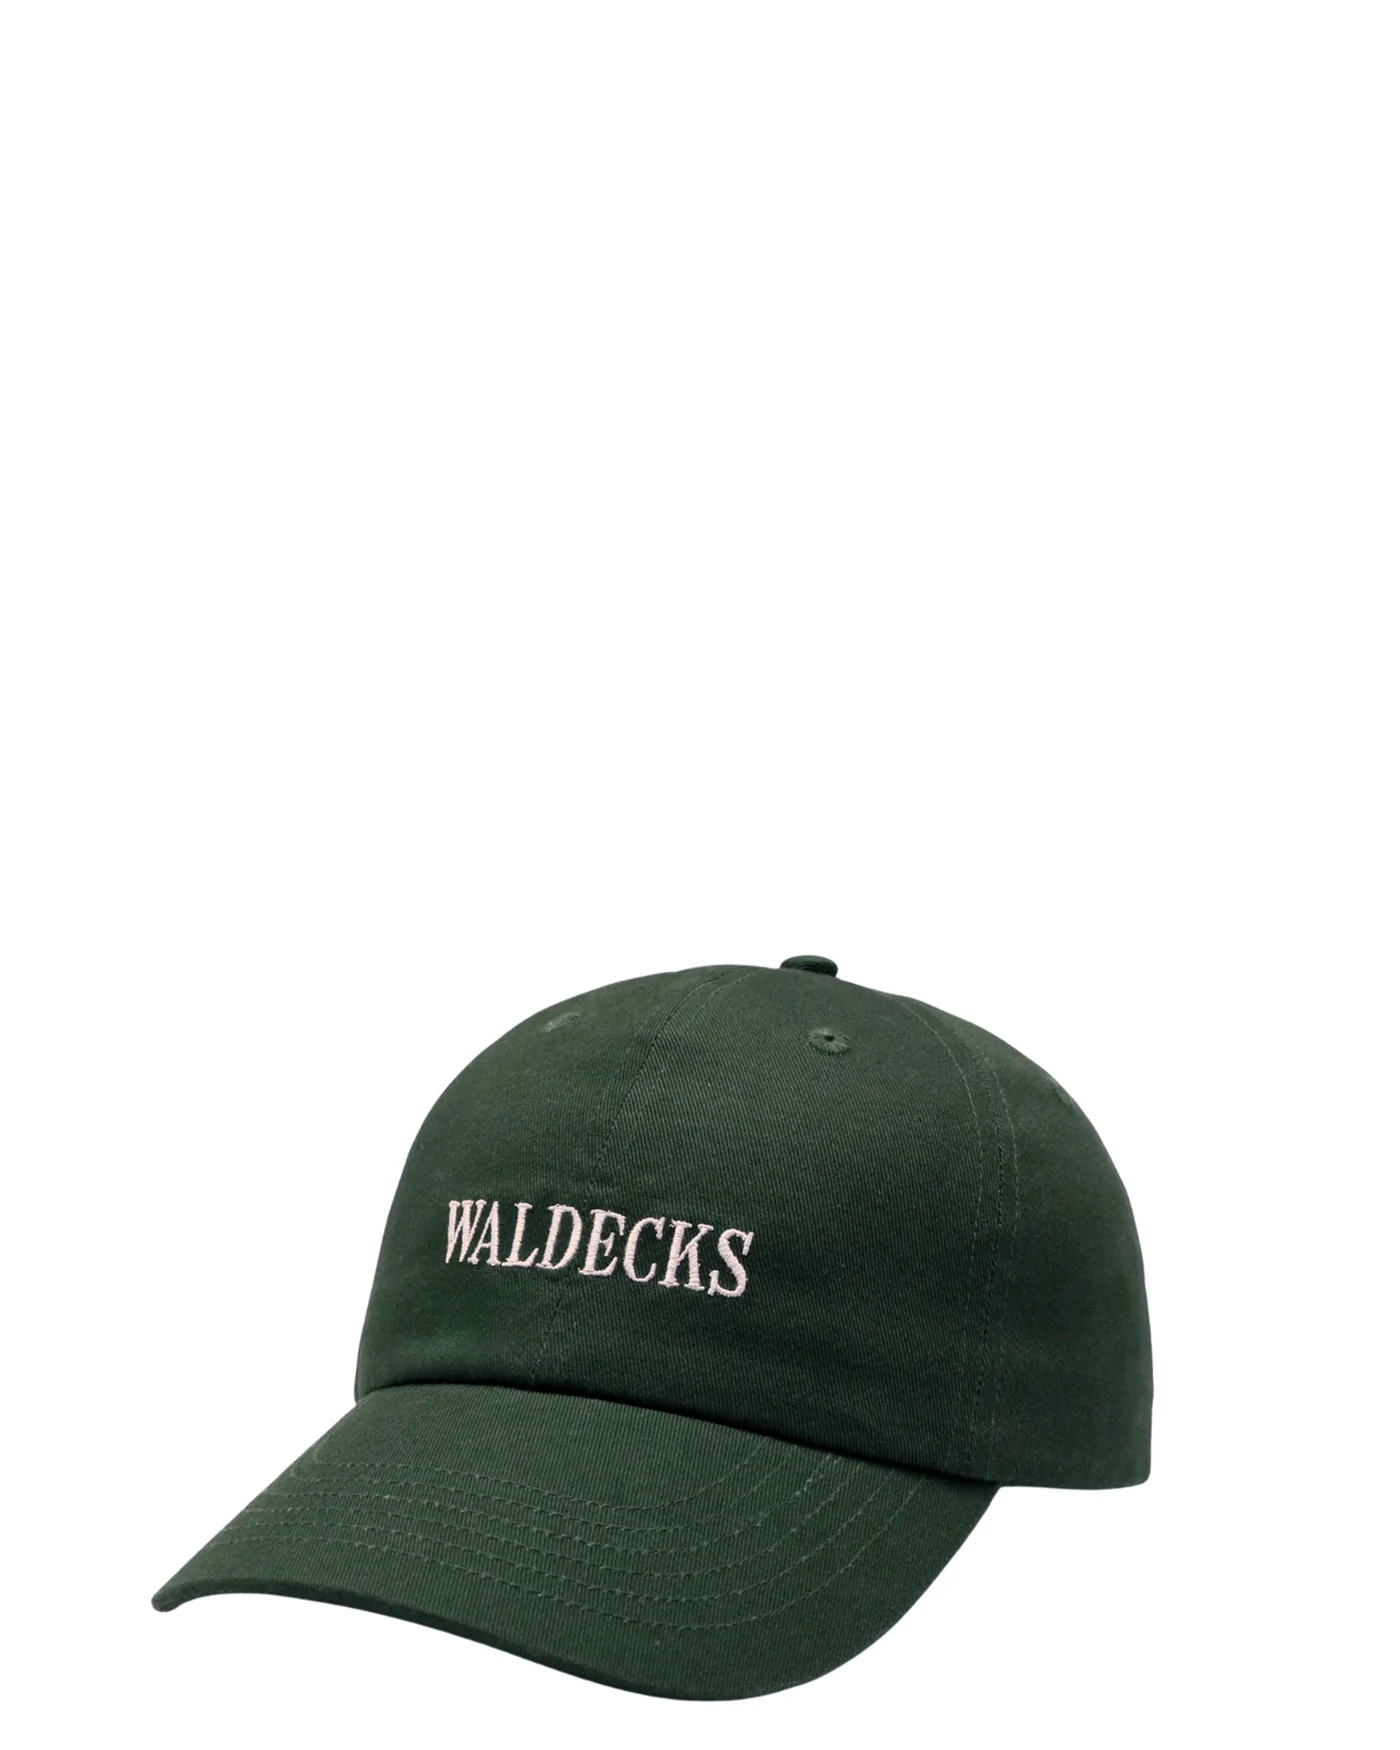 Waldecks Dad Cap